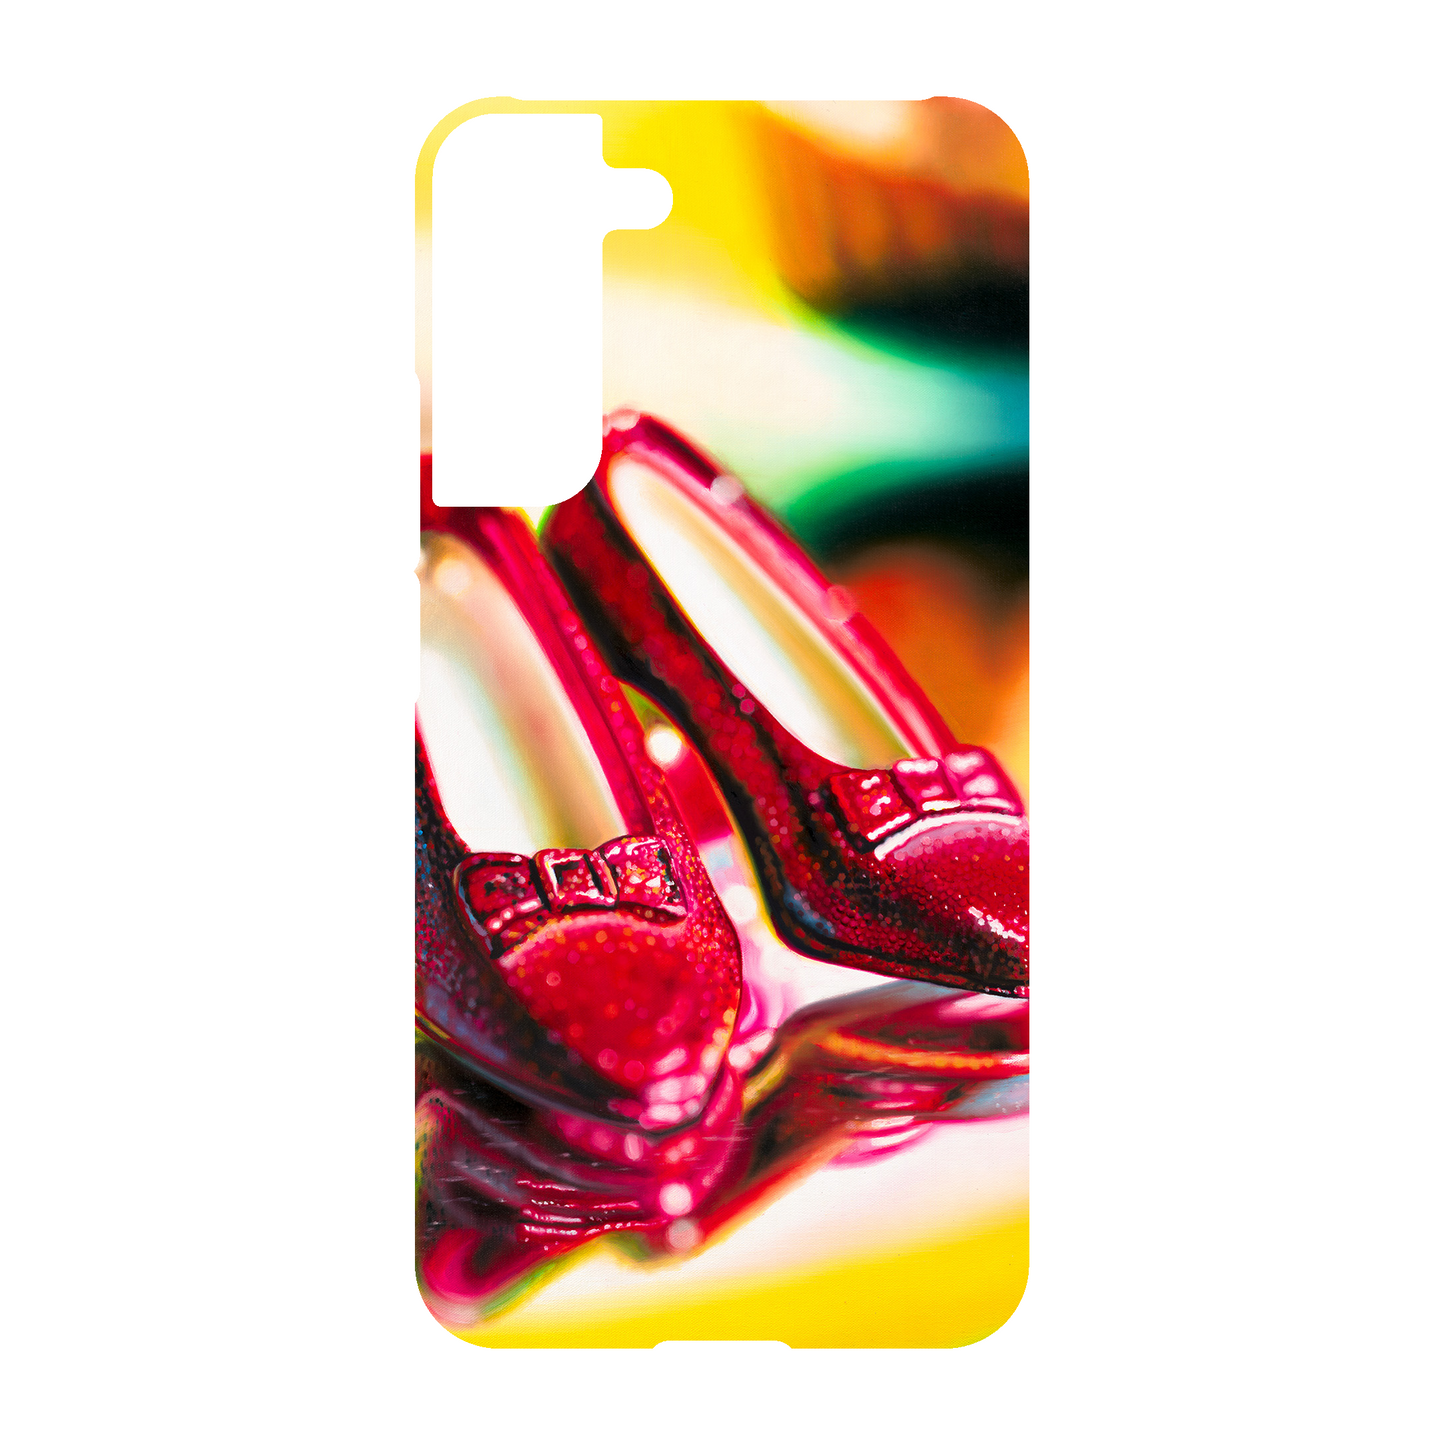 Ruby Slippers Snap Phone Case - alternative phone models